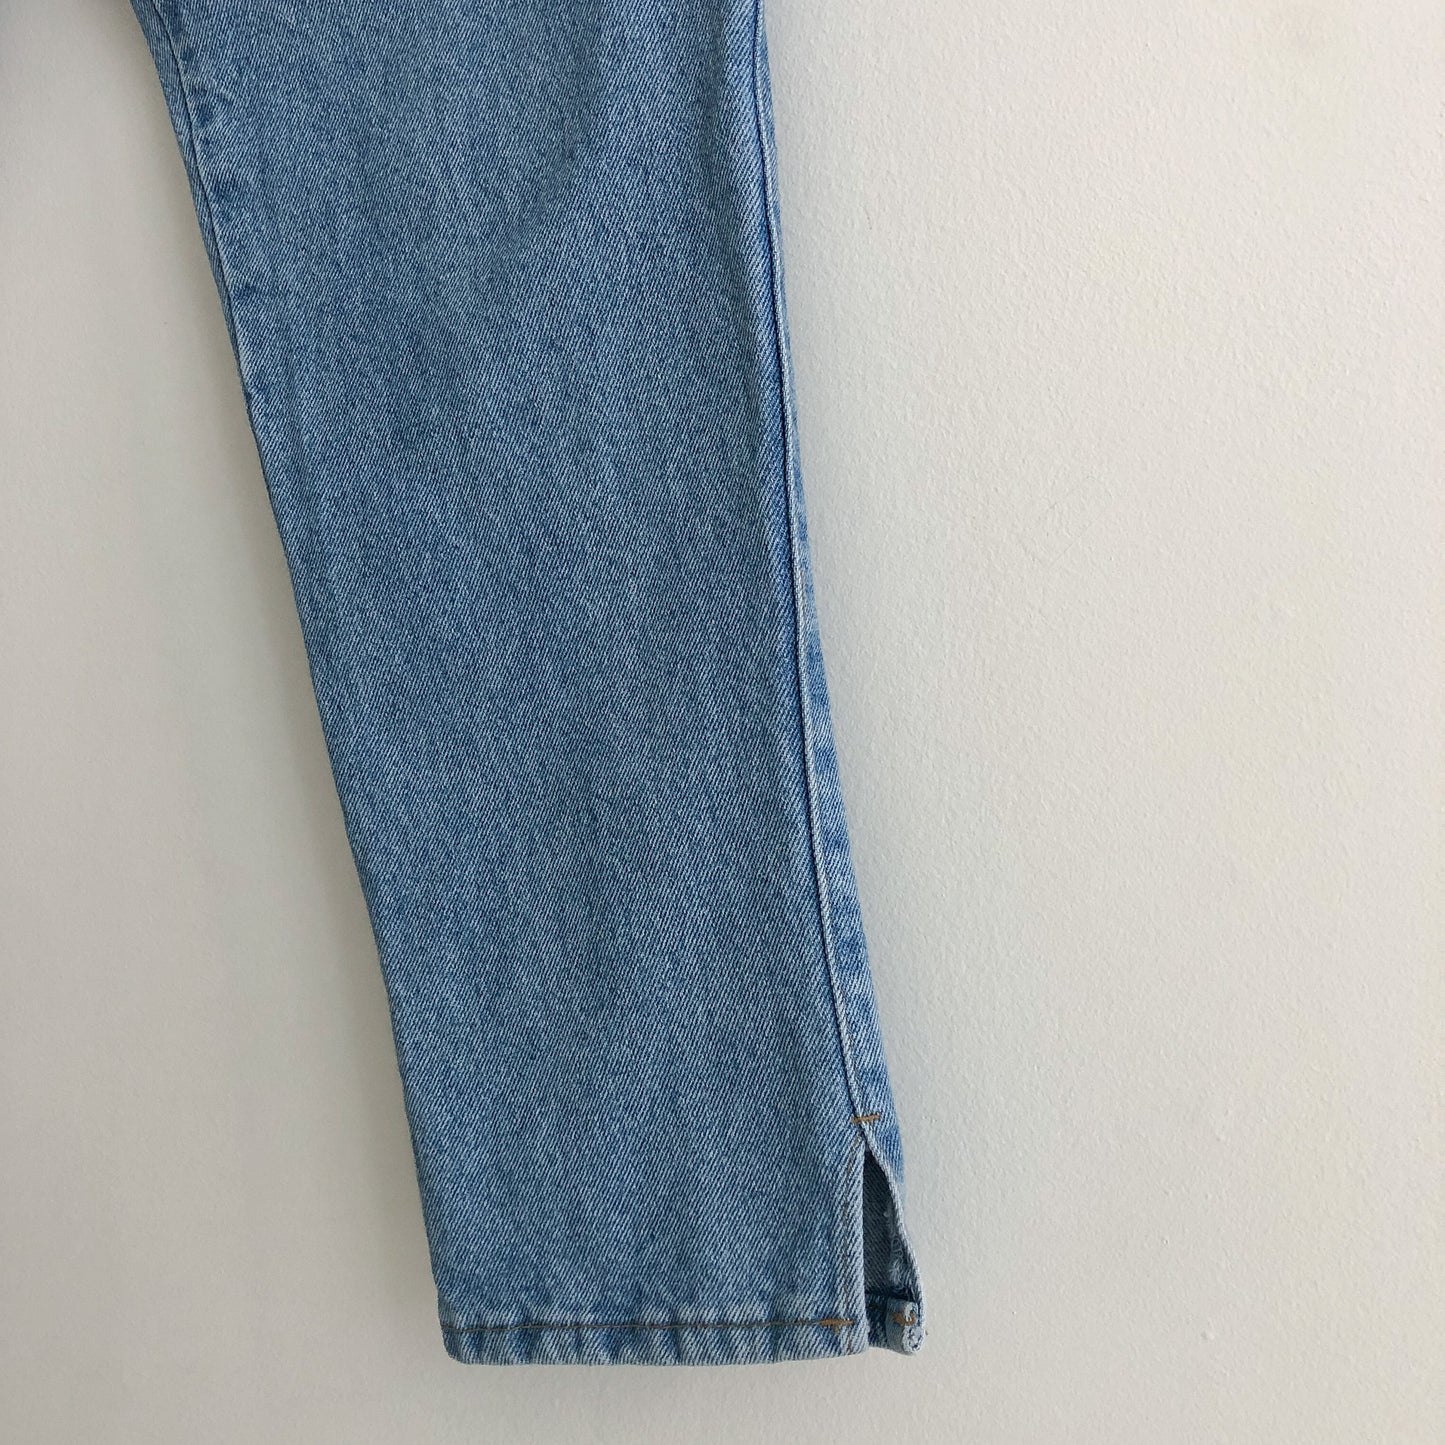 Vintage Jessie Jeanswear Embroidered Jeans